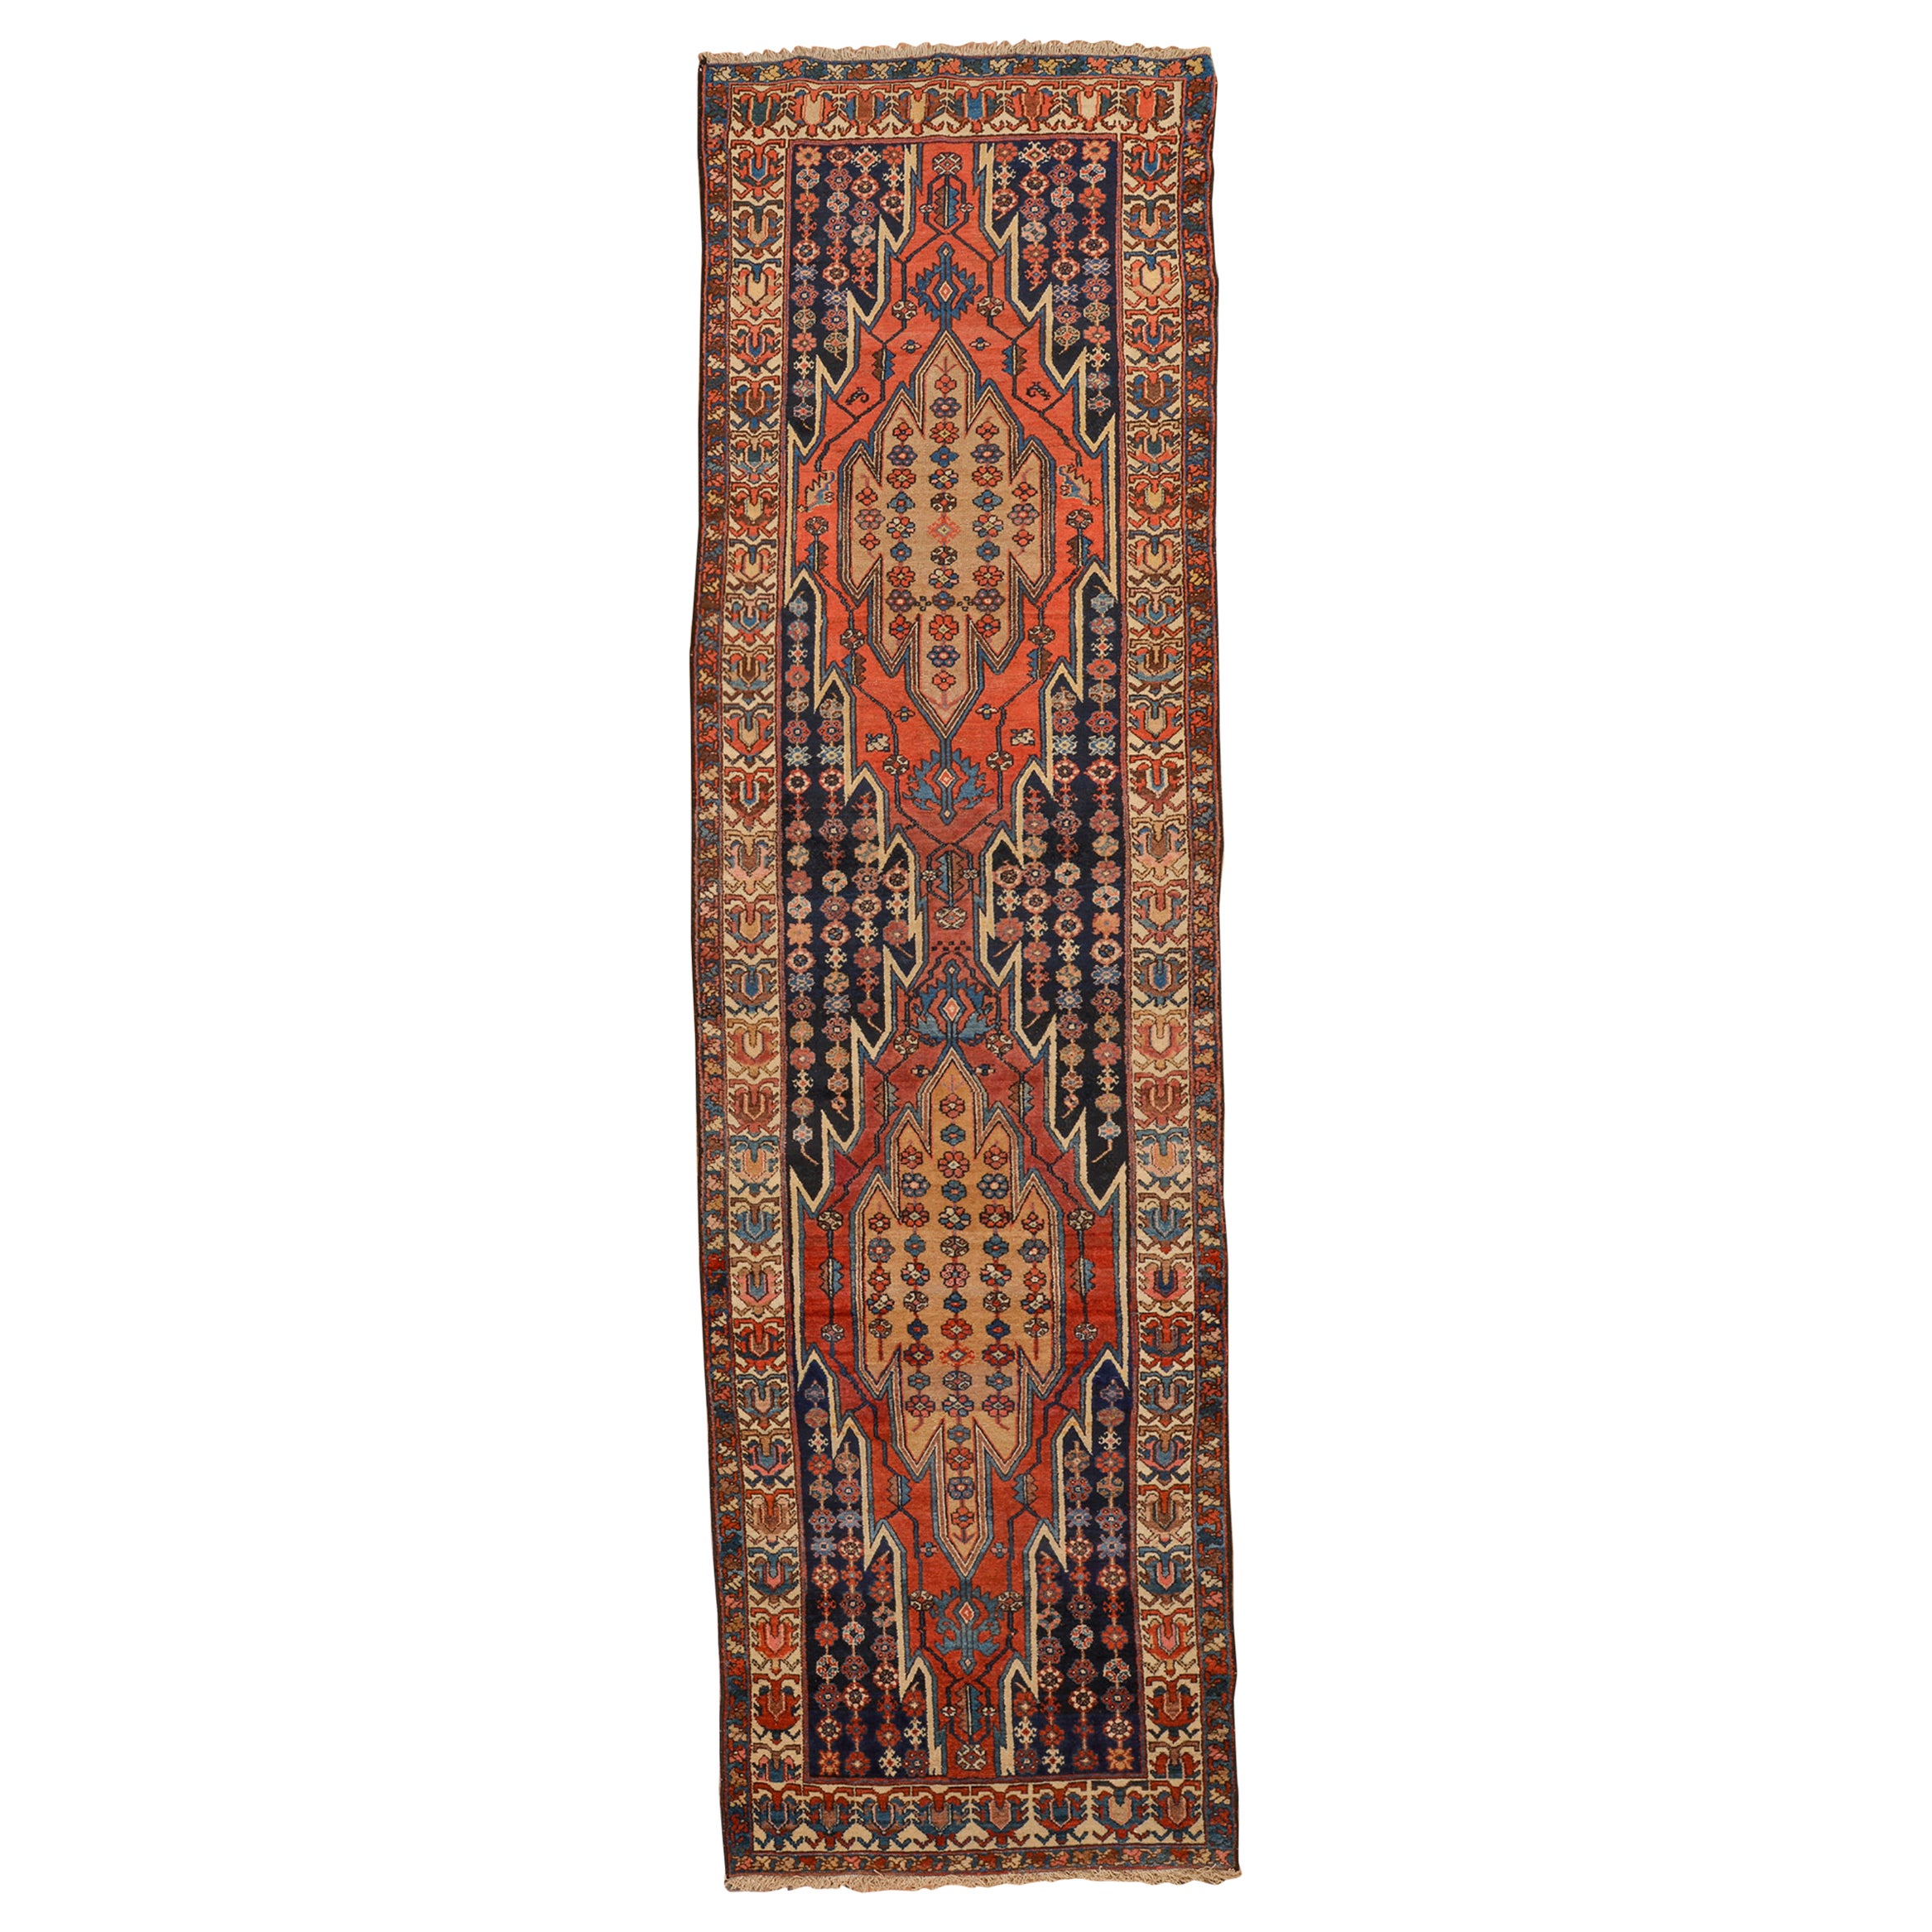 Azeri Carpet with Mazlegan Collection Design